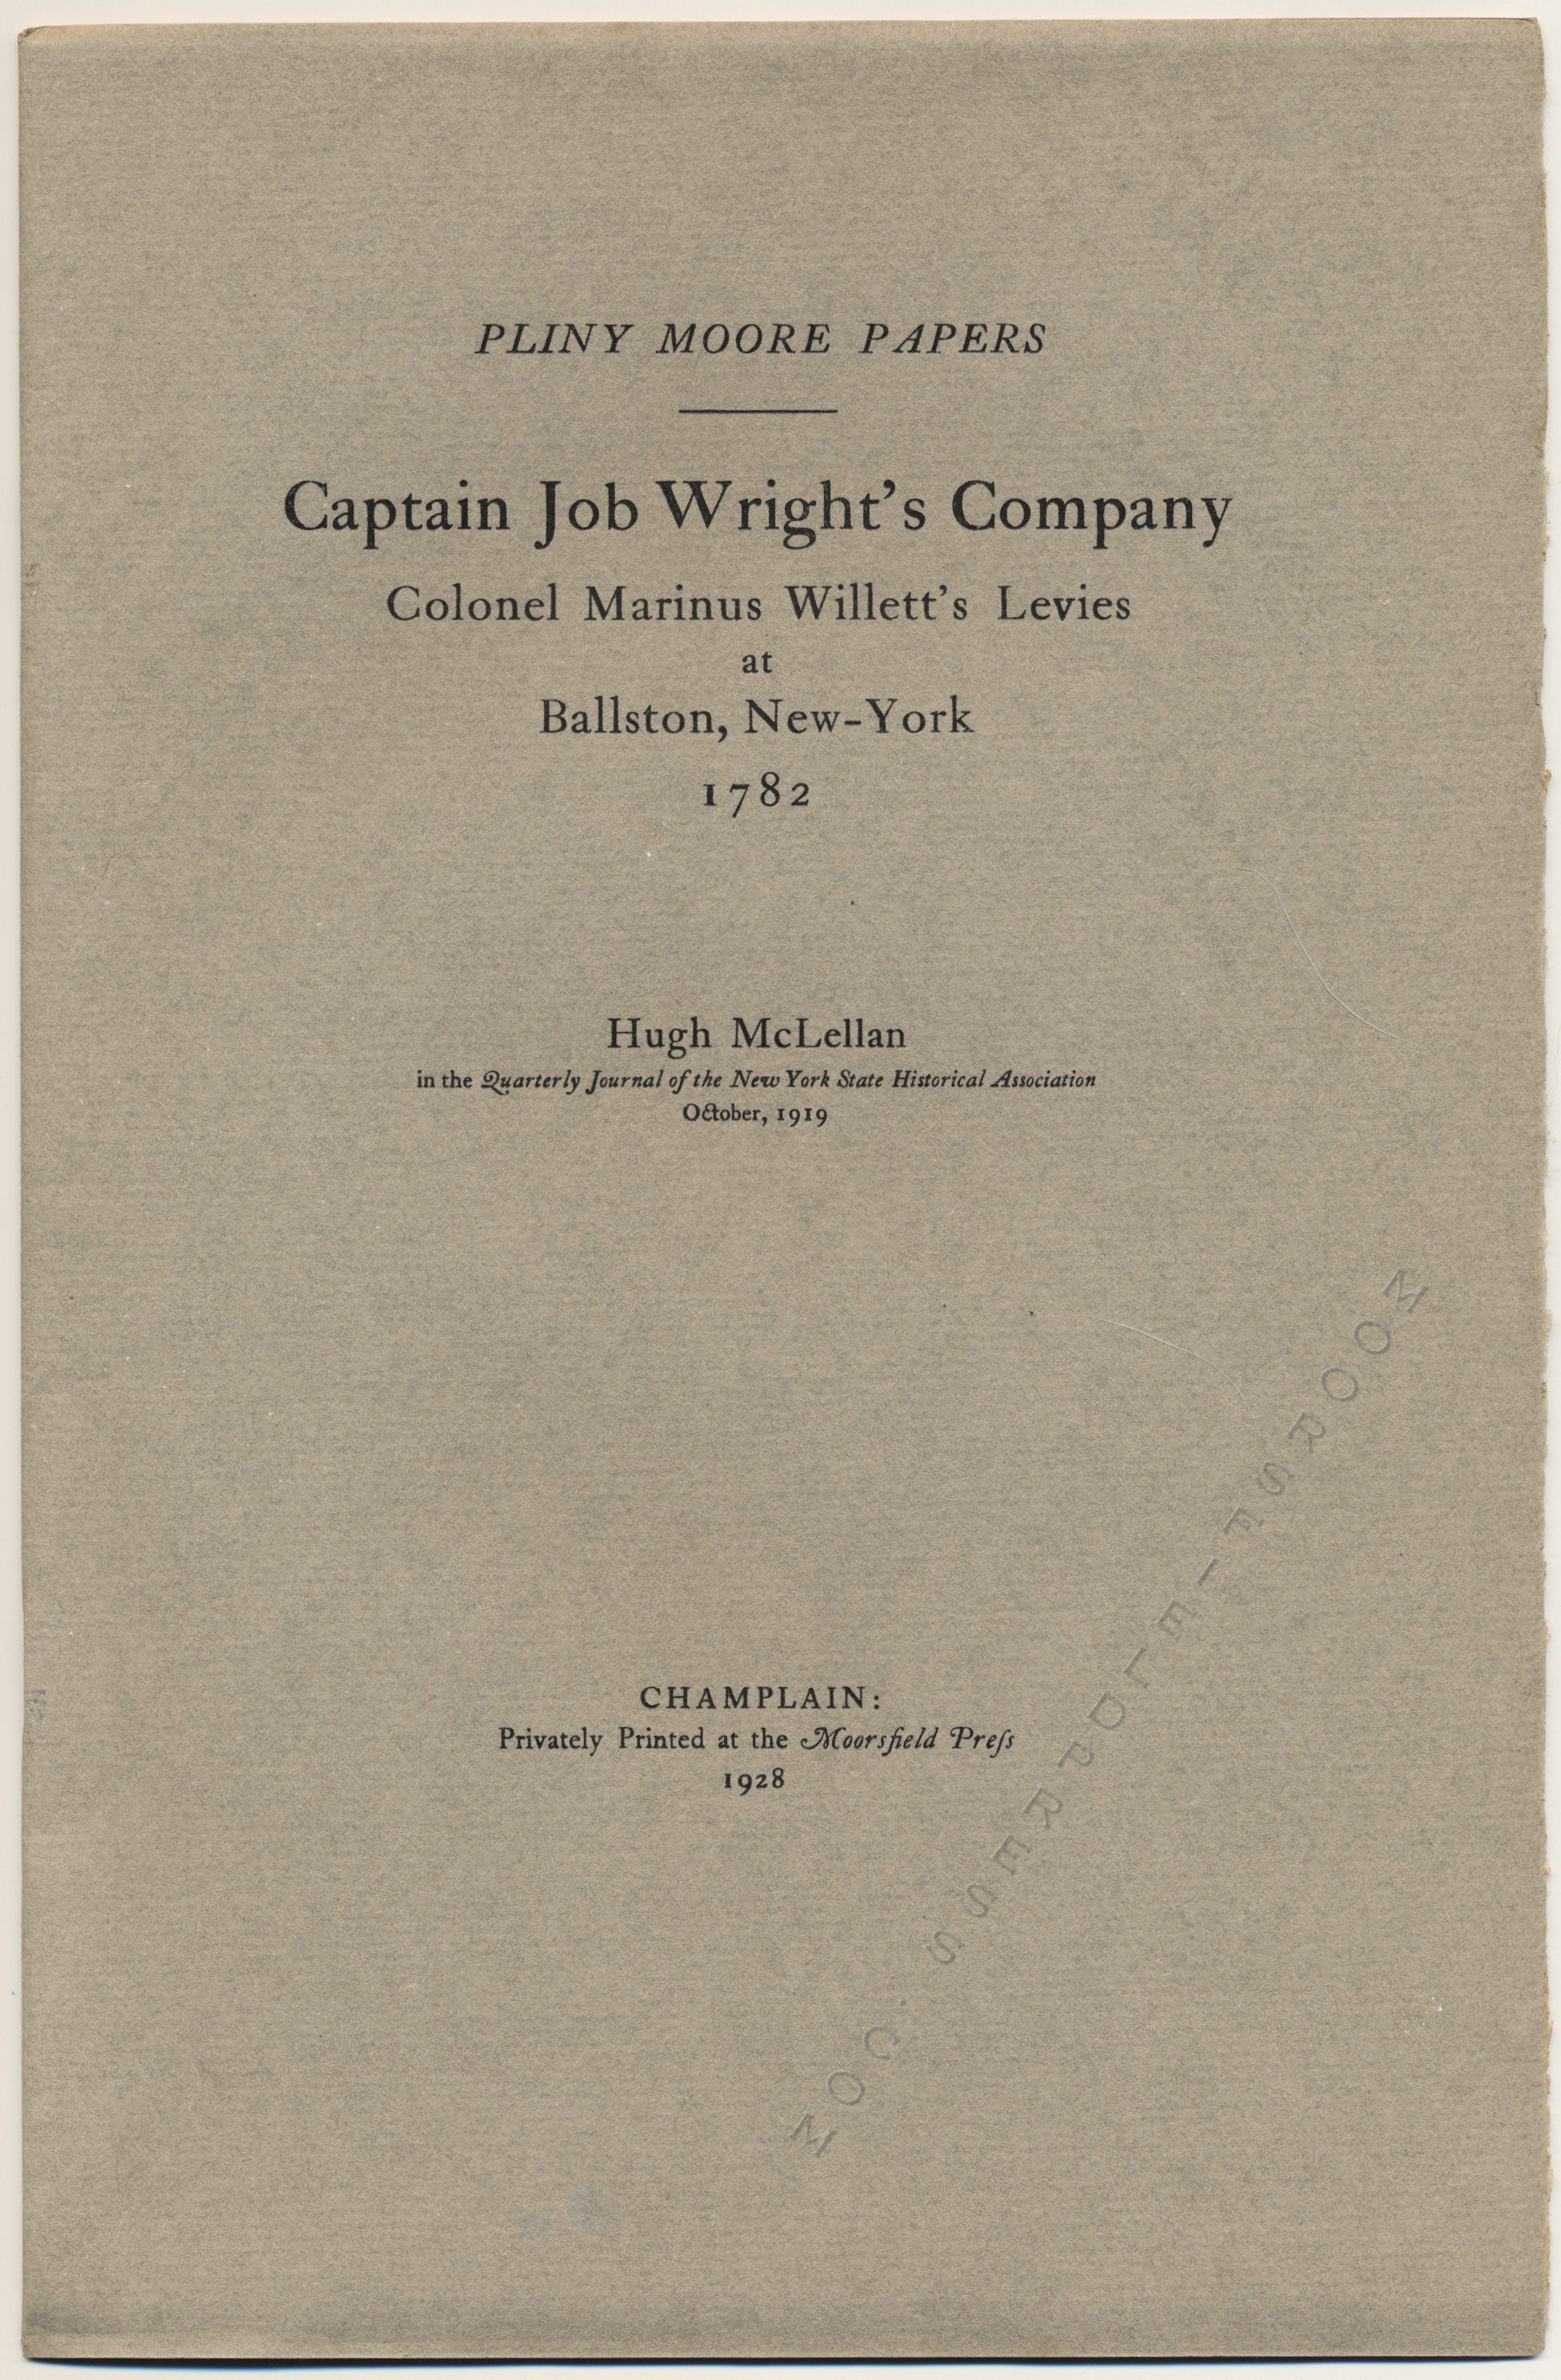 moorsfield press publication-captain
                              job wrights company-pliny moore